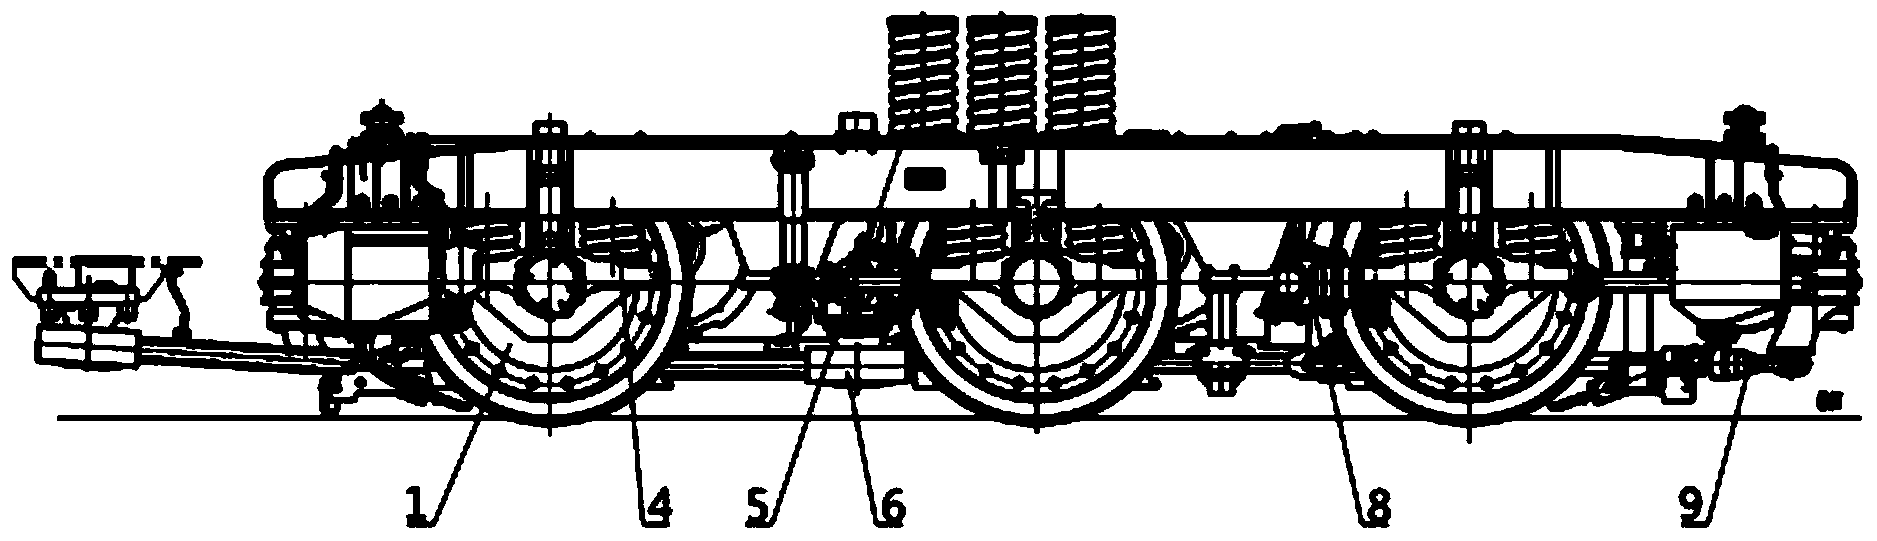 Locomotive three-axis radial bogie